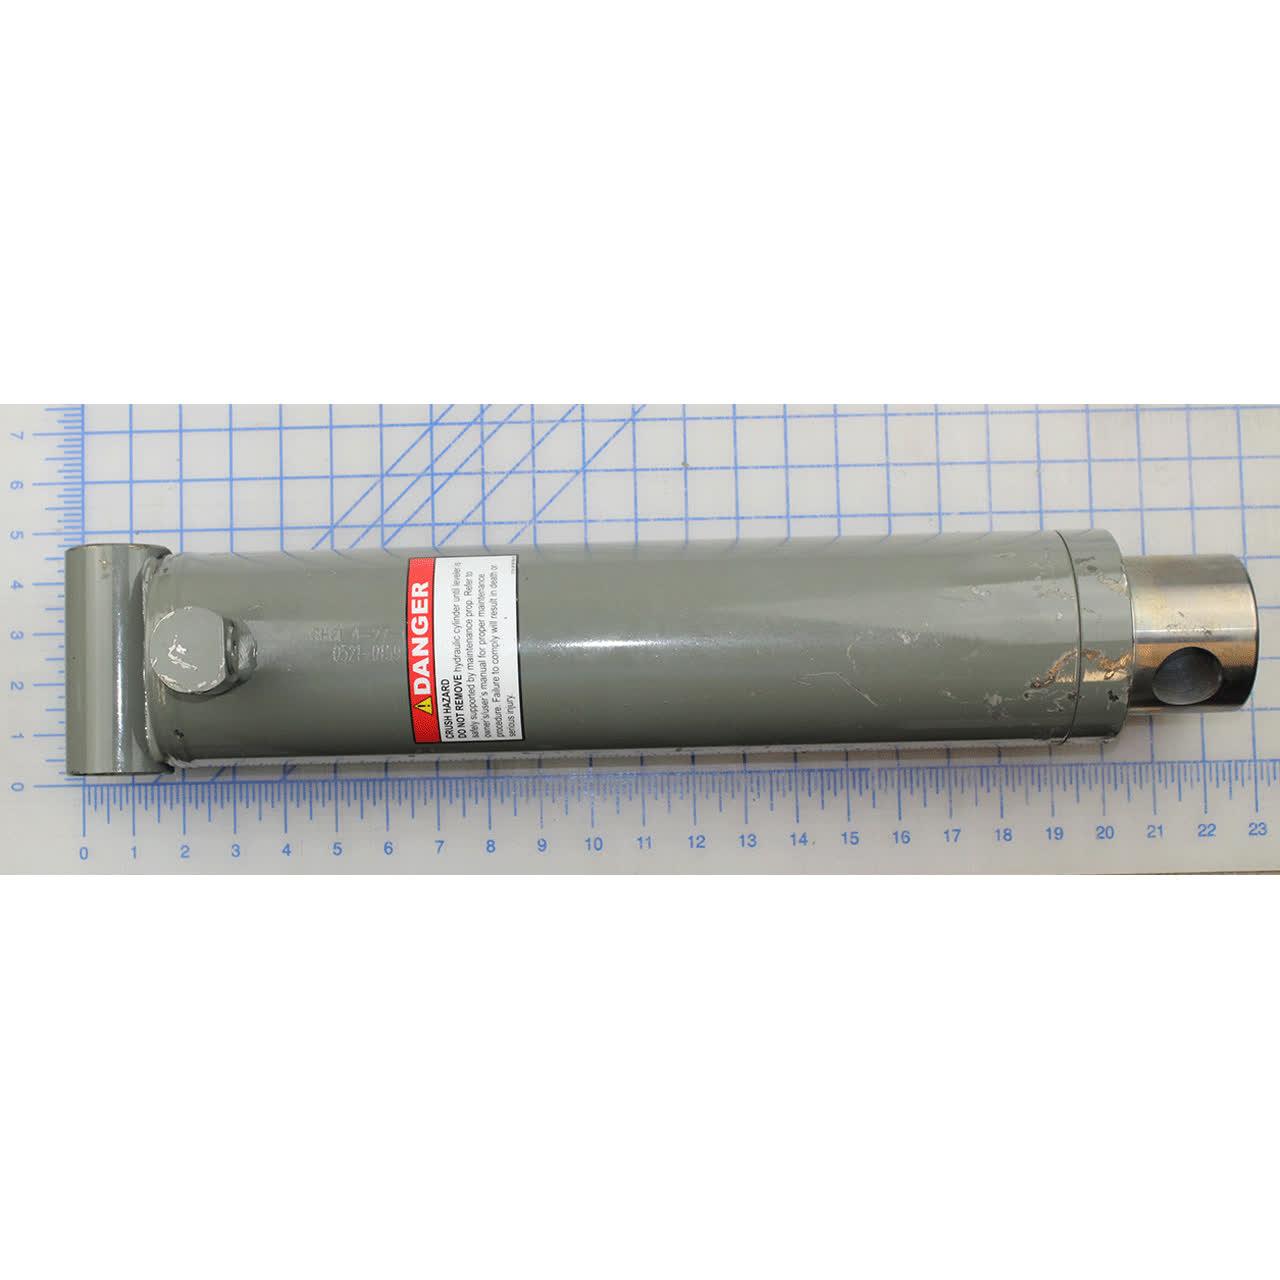 0521-0159 Cylinder, Hoist, 13.75 Sroke 3" Ram, 3.5" Bore, 3/4-16 O-Ring Port - Poweramp